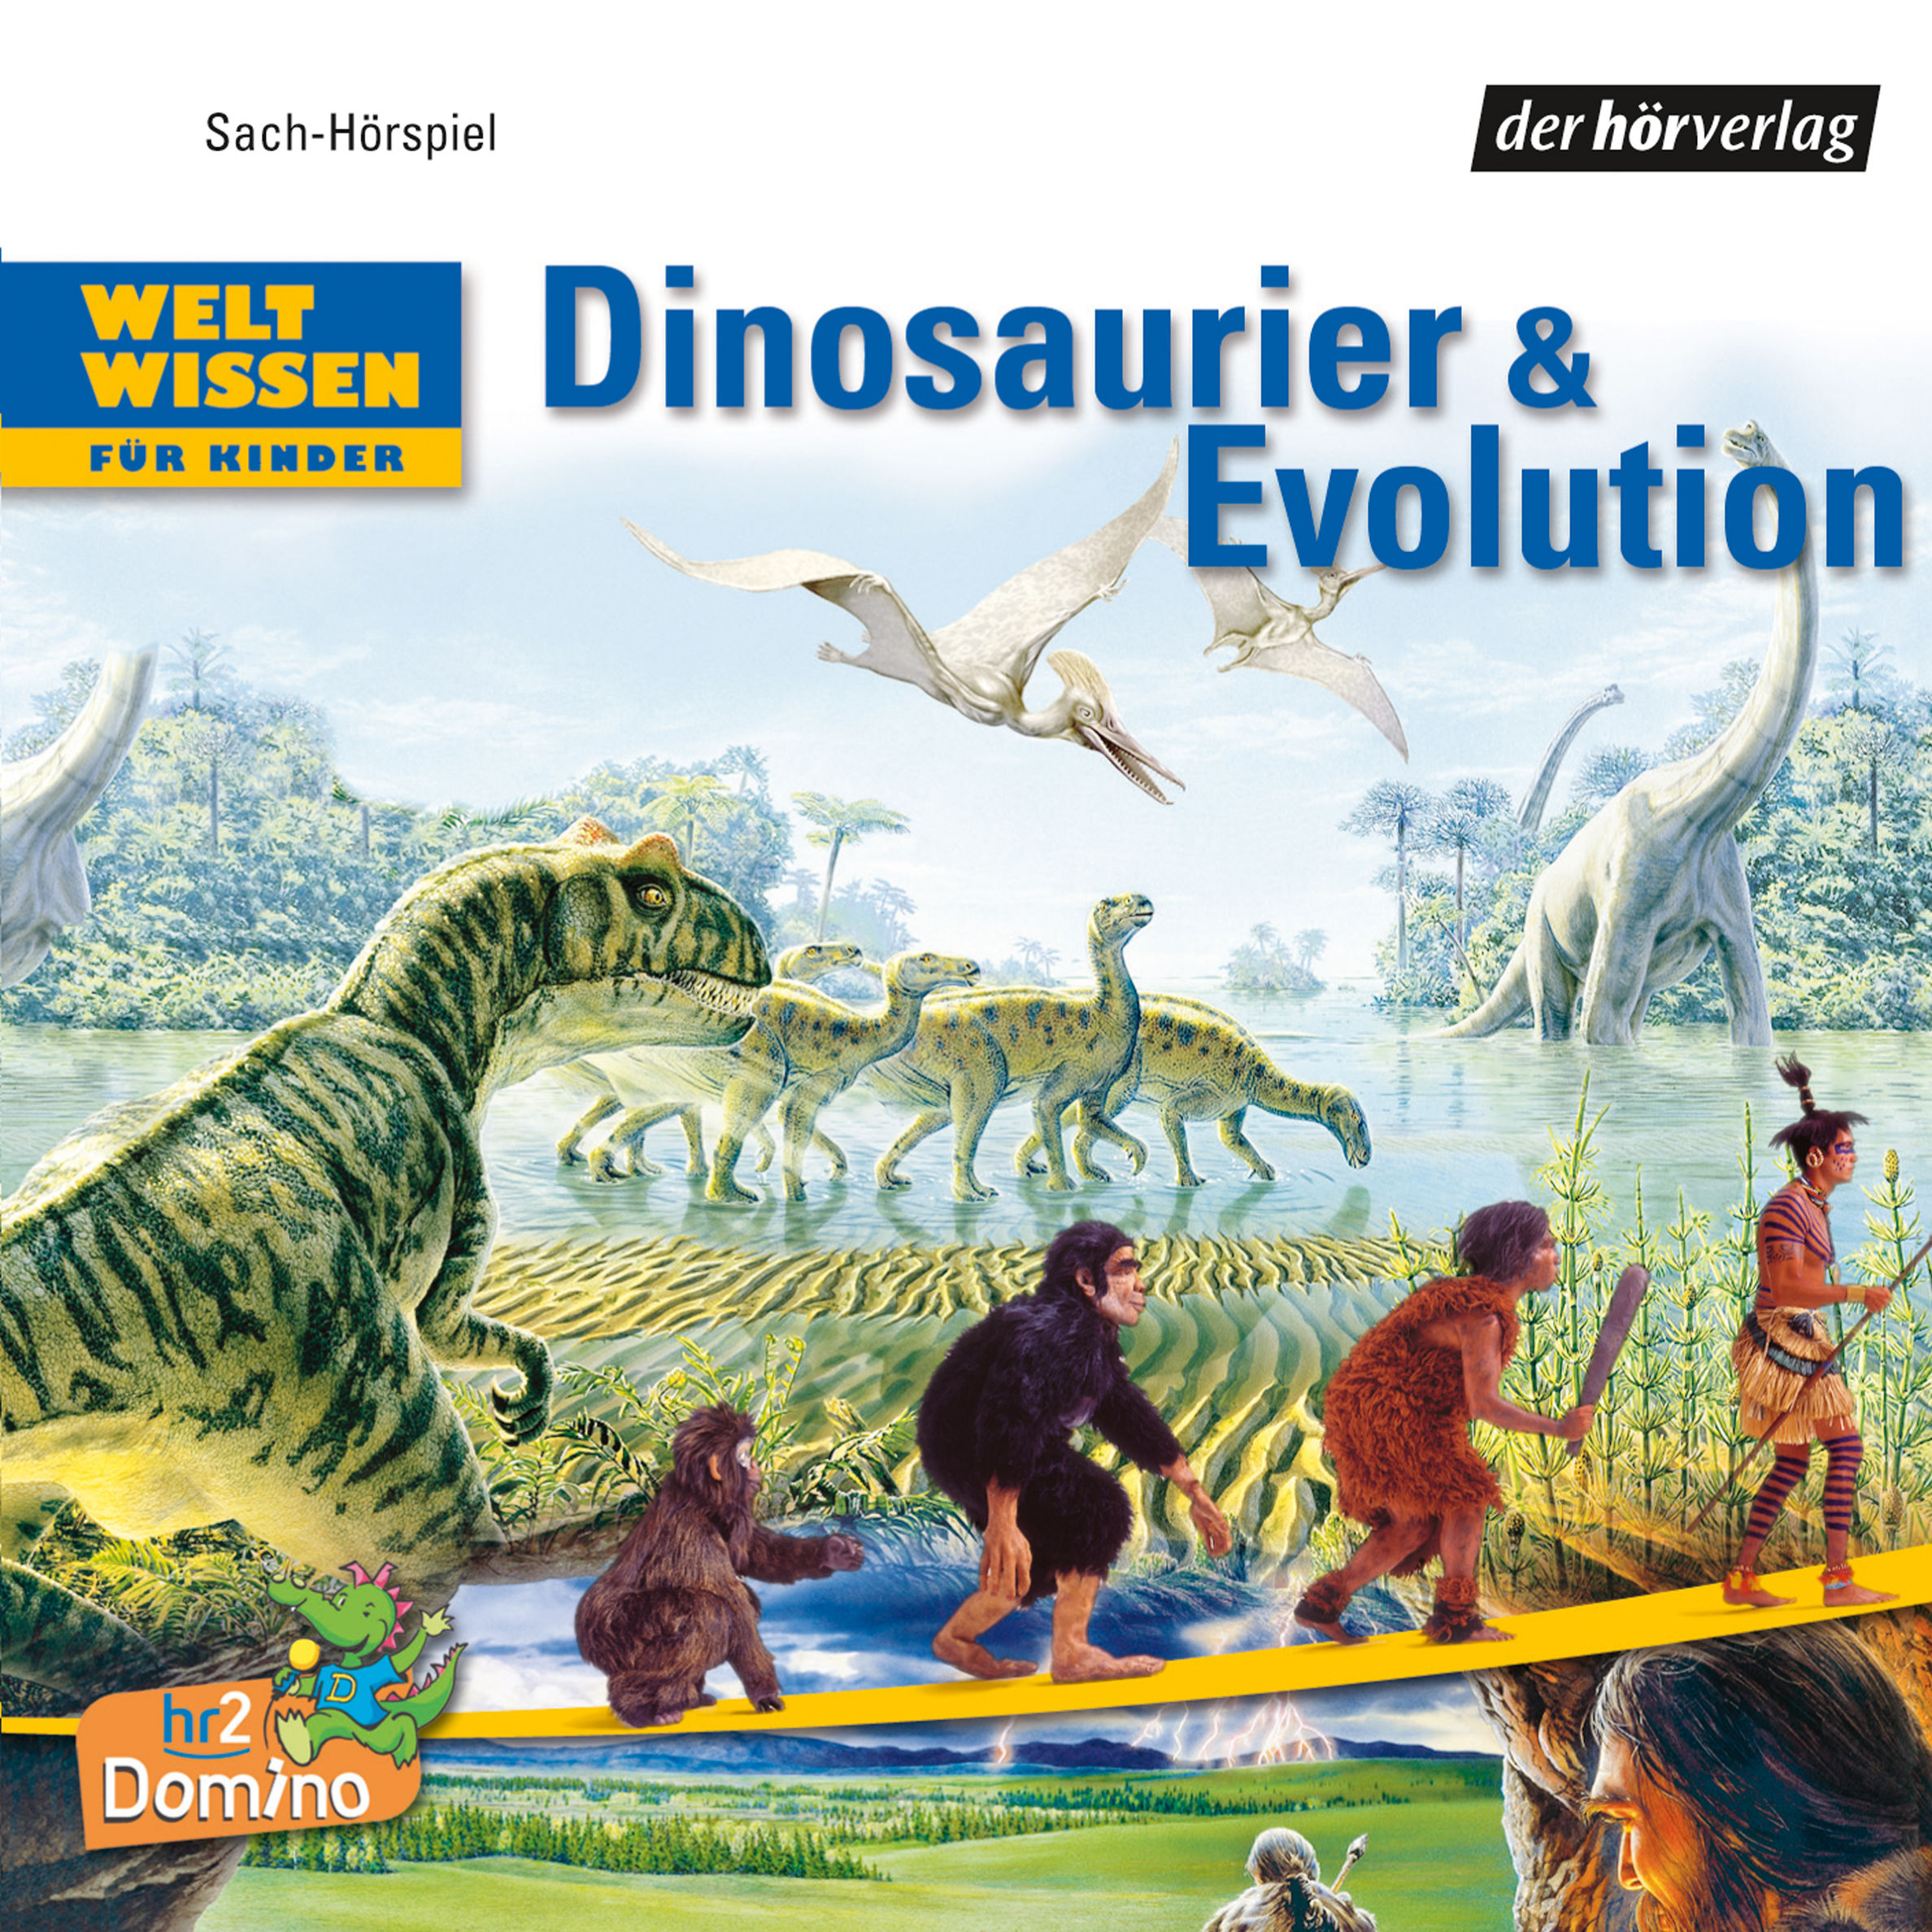 Weltwissen für Kinder - Weltwissen für Kinder: Dinosaurier & Evolution DL  Hörbuch Download